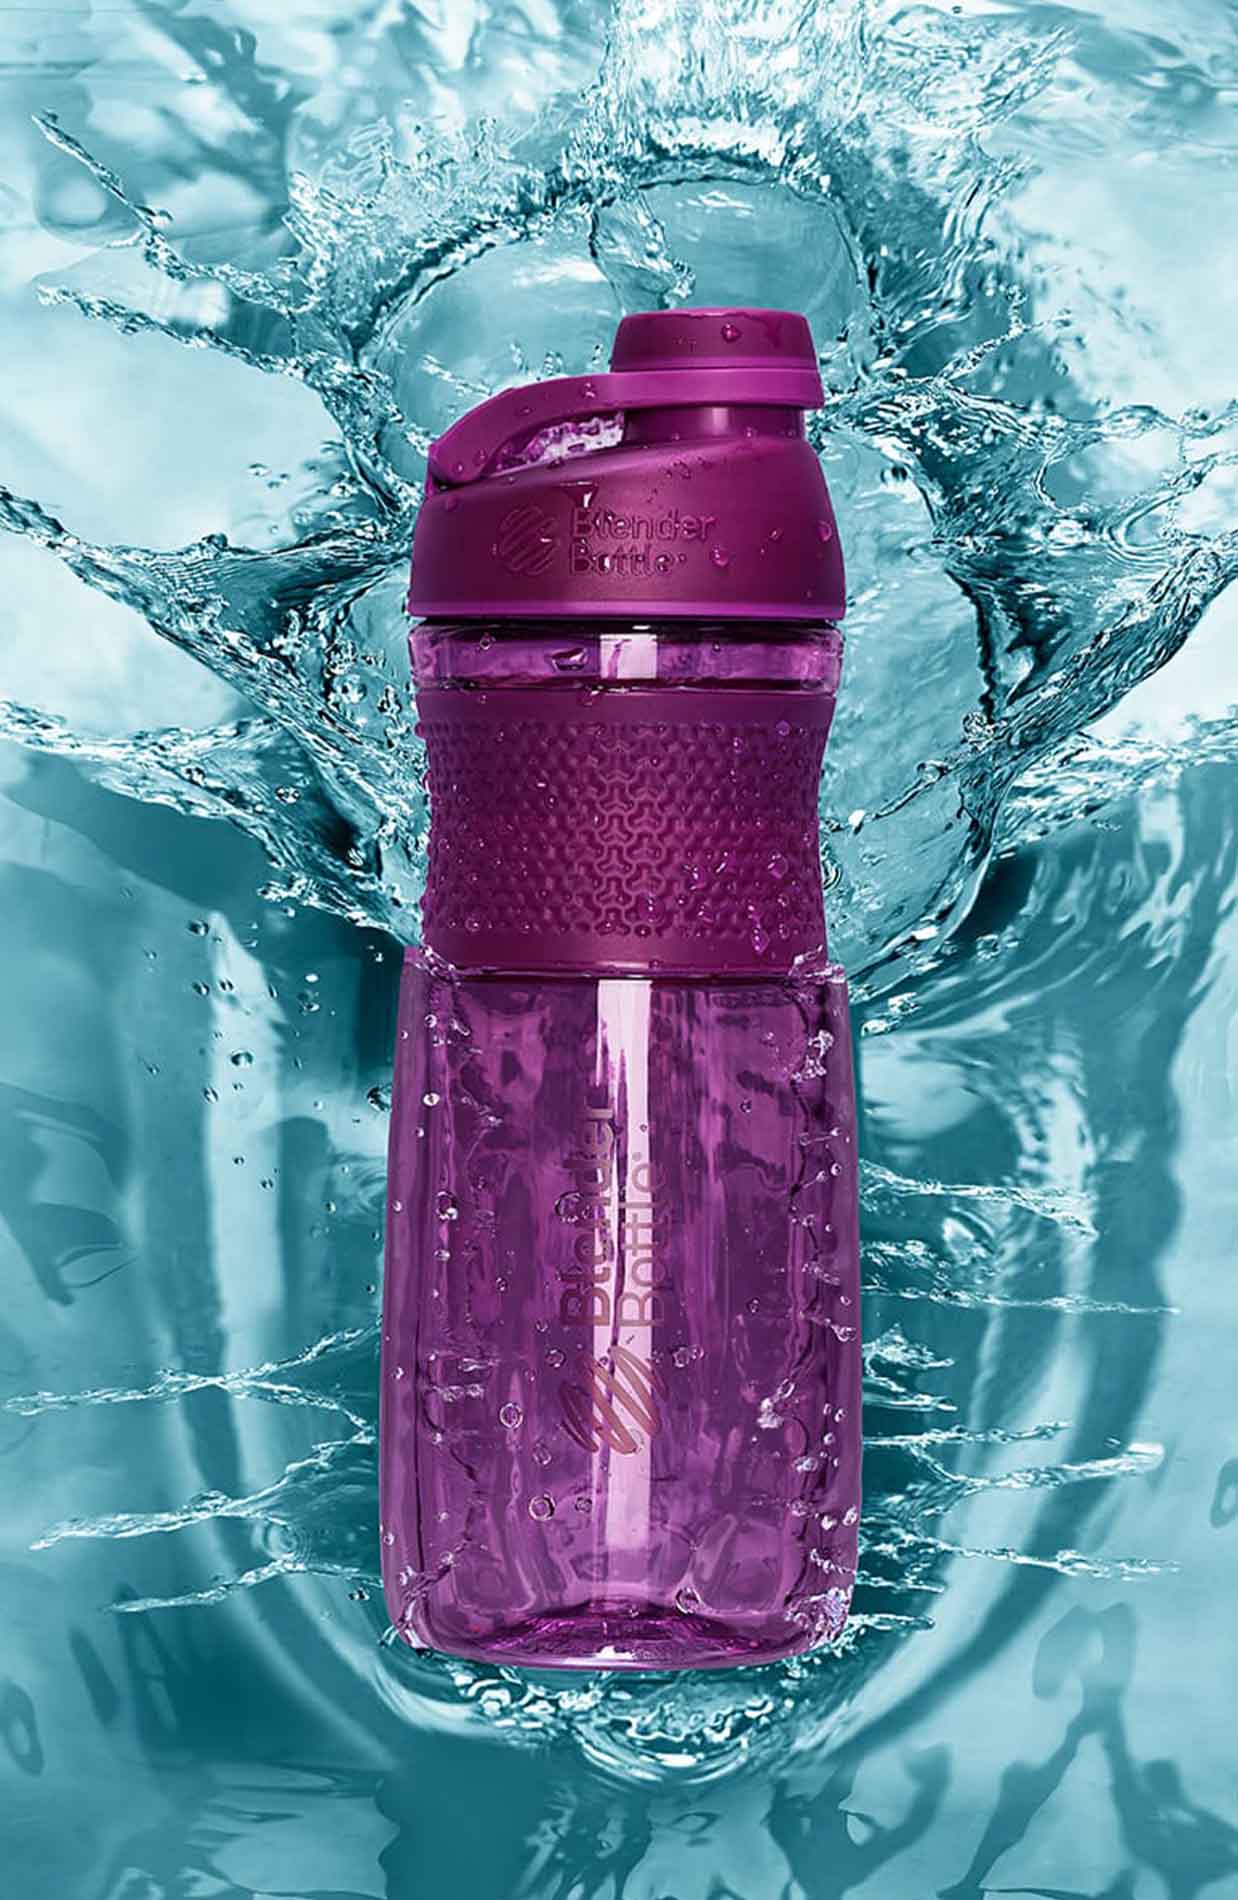 Blender Bottle SportMixer 28 Ounce (Purple)